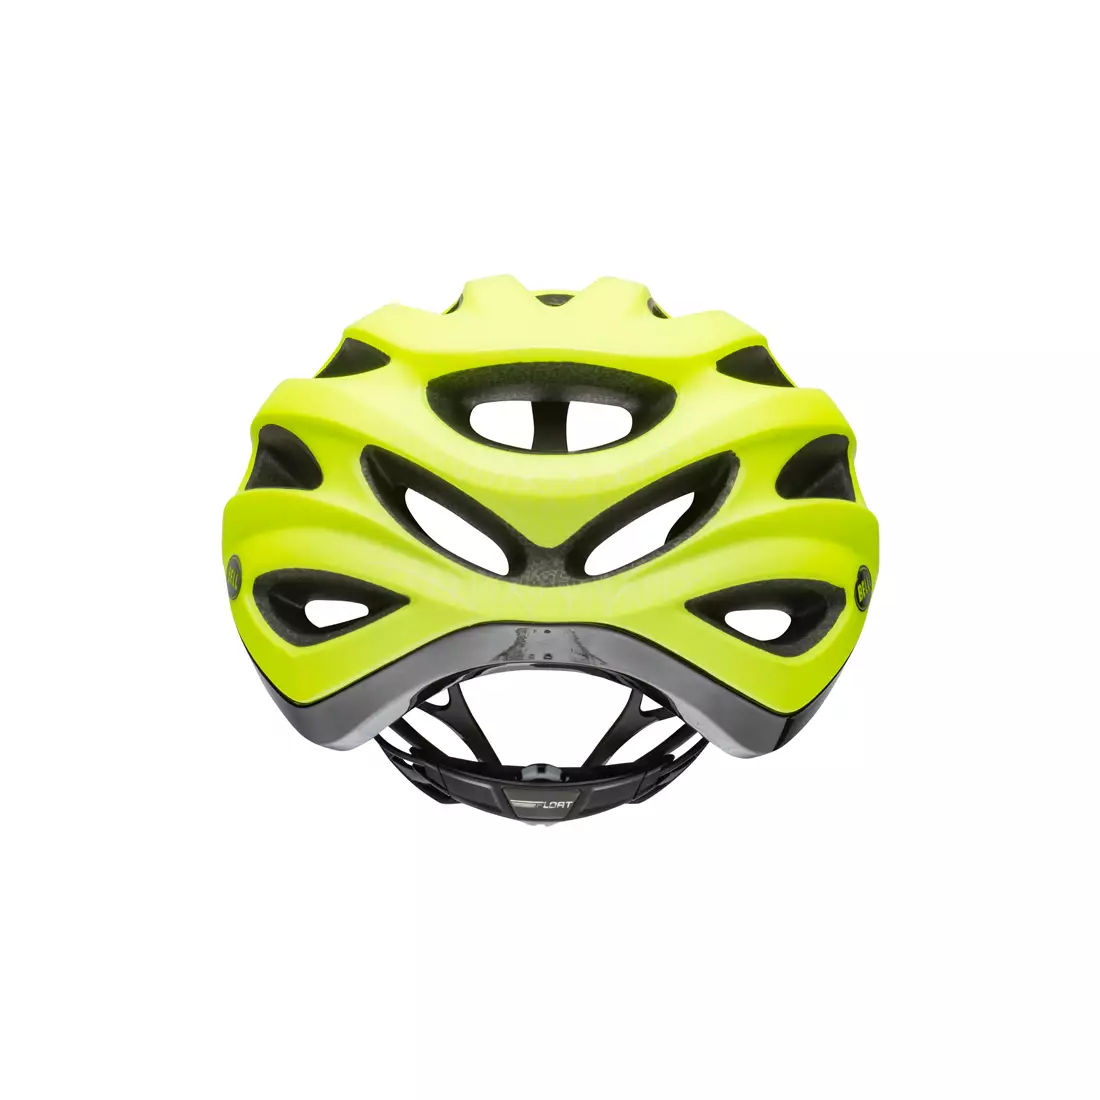 BELL FORMULA road bike helmet, matte retina black